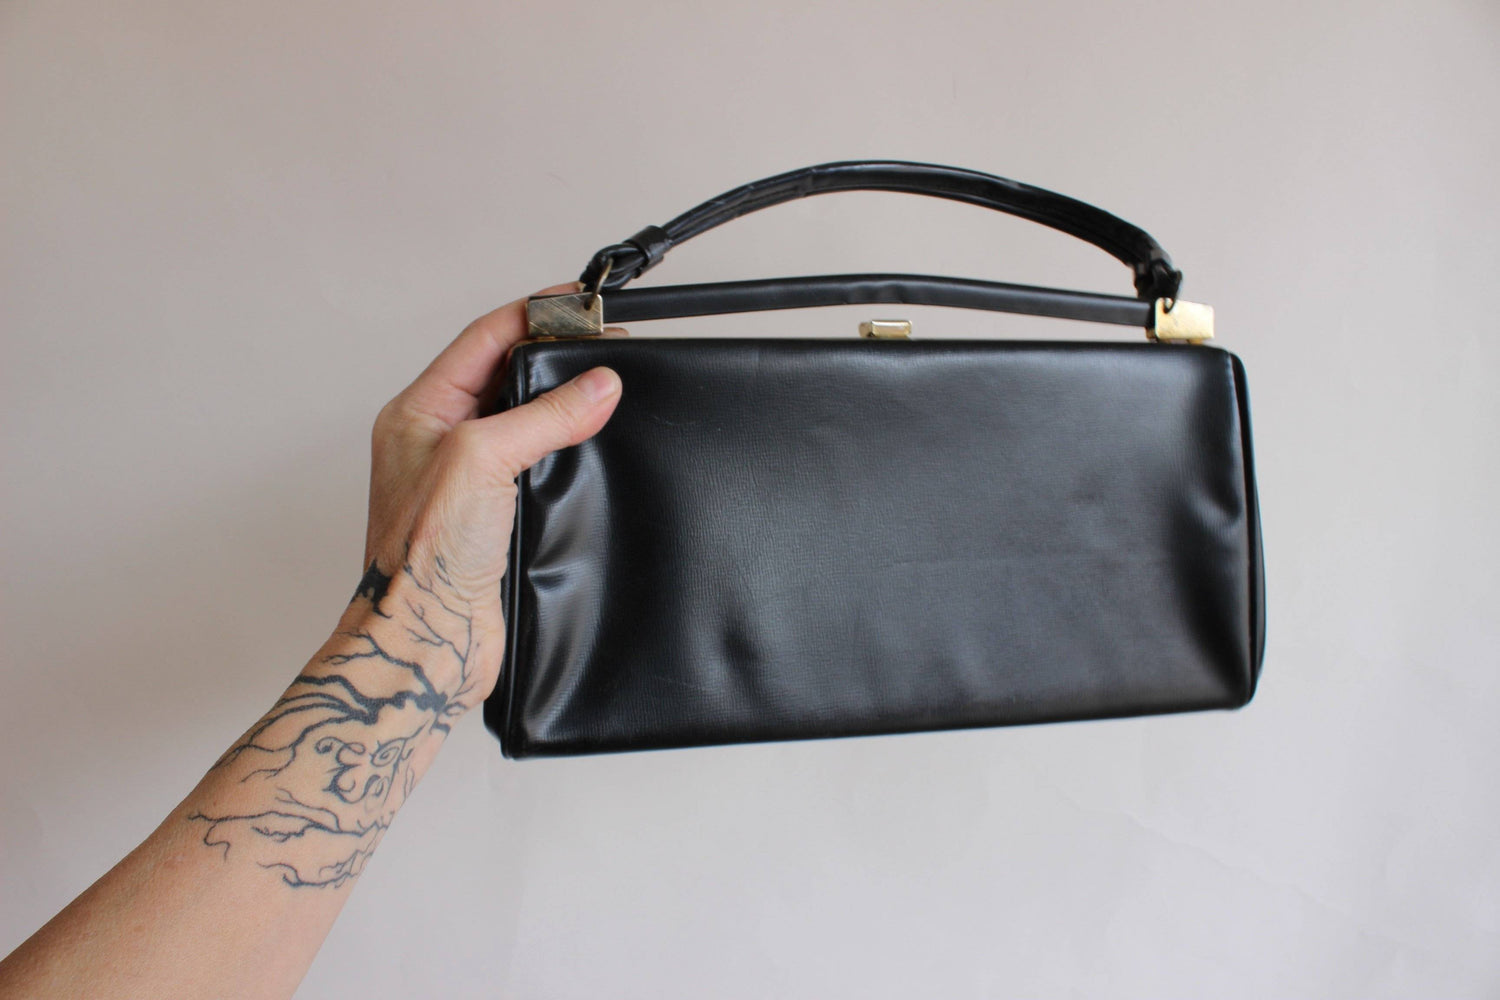 Vintage 1960s Black Honey Bag Purse-The Black Velvet Emporium-1960s Bag,1960s Purse,60s Handbag,Black Purse,Honey Bag,Polkadot,Vintage,Vintage Handbag